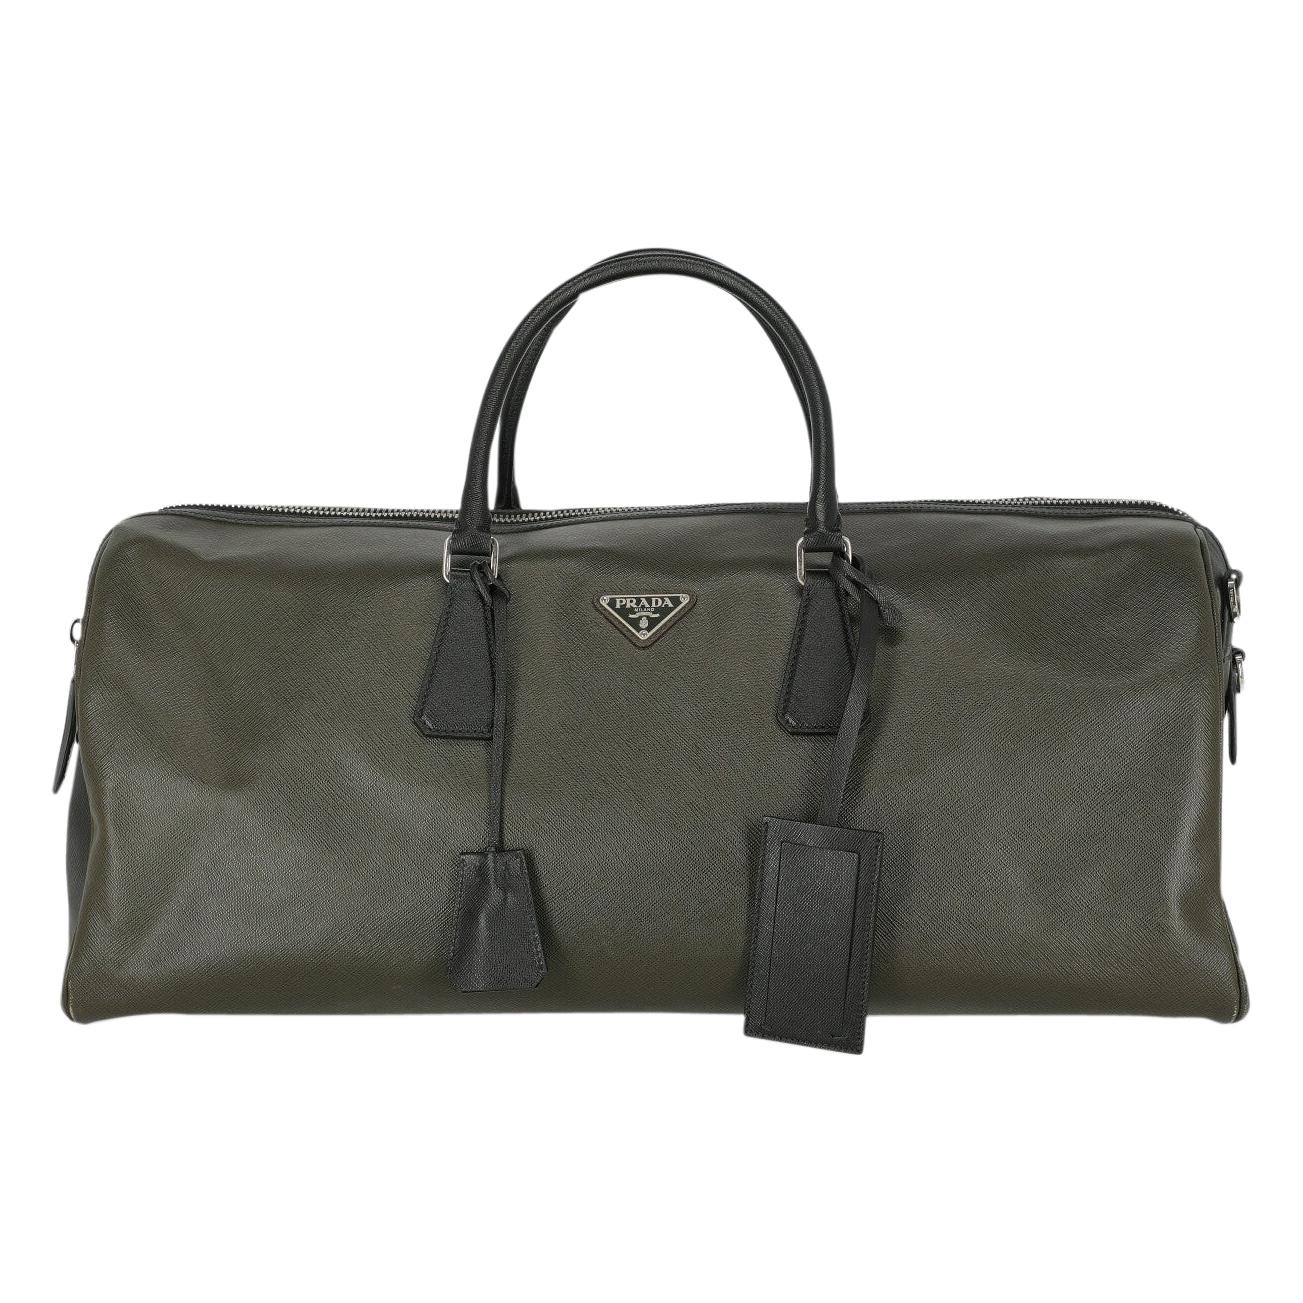 Prada Woman Travel bag Black Leather For Sale